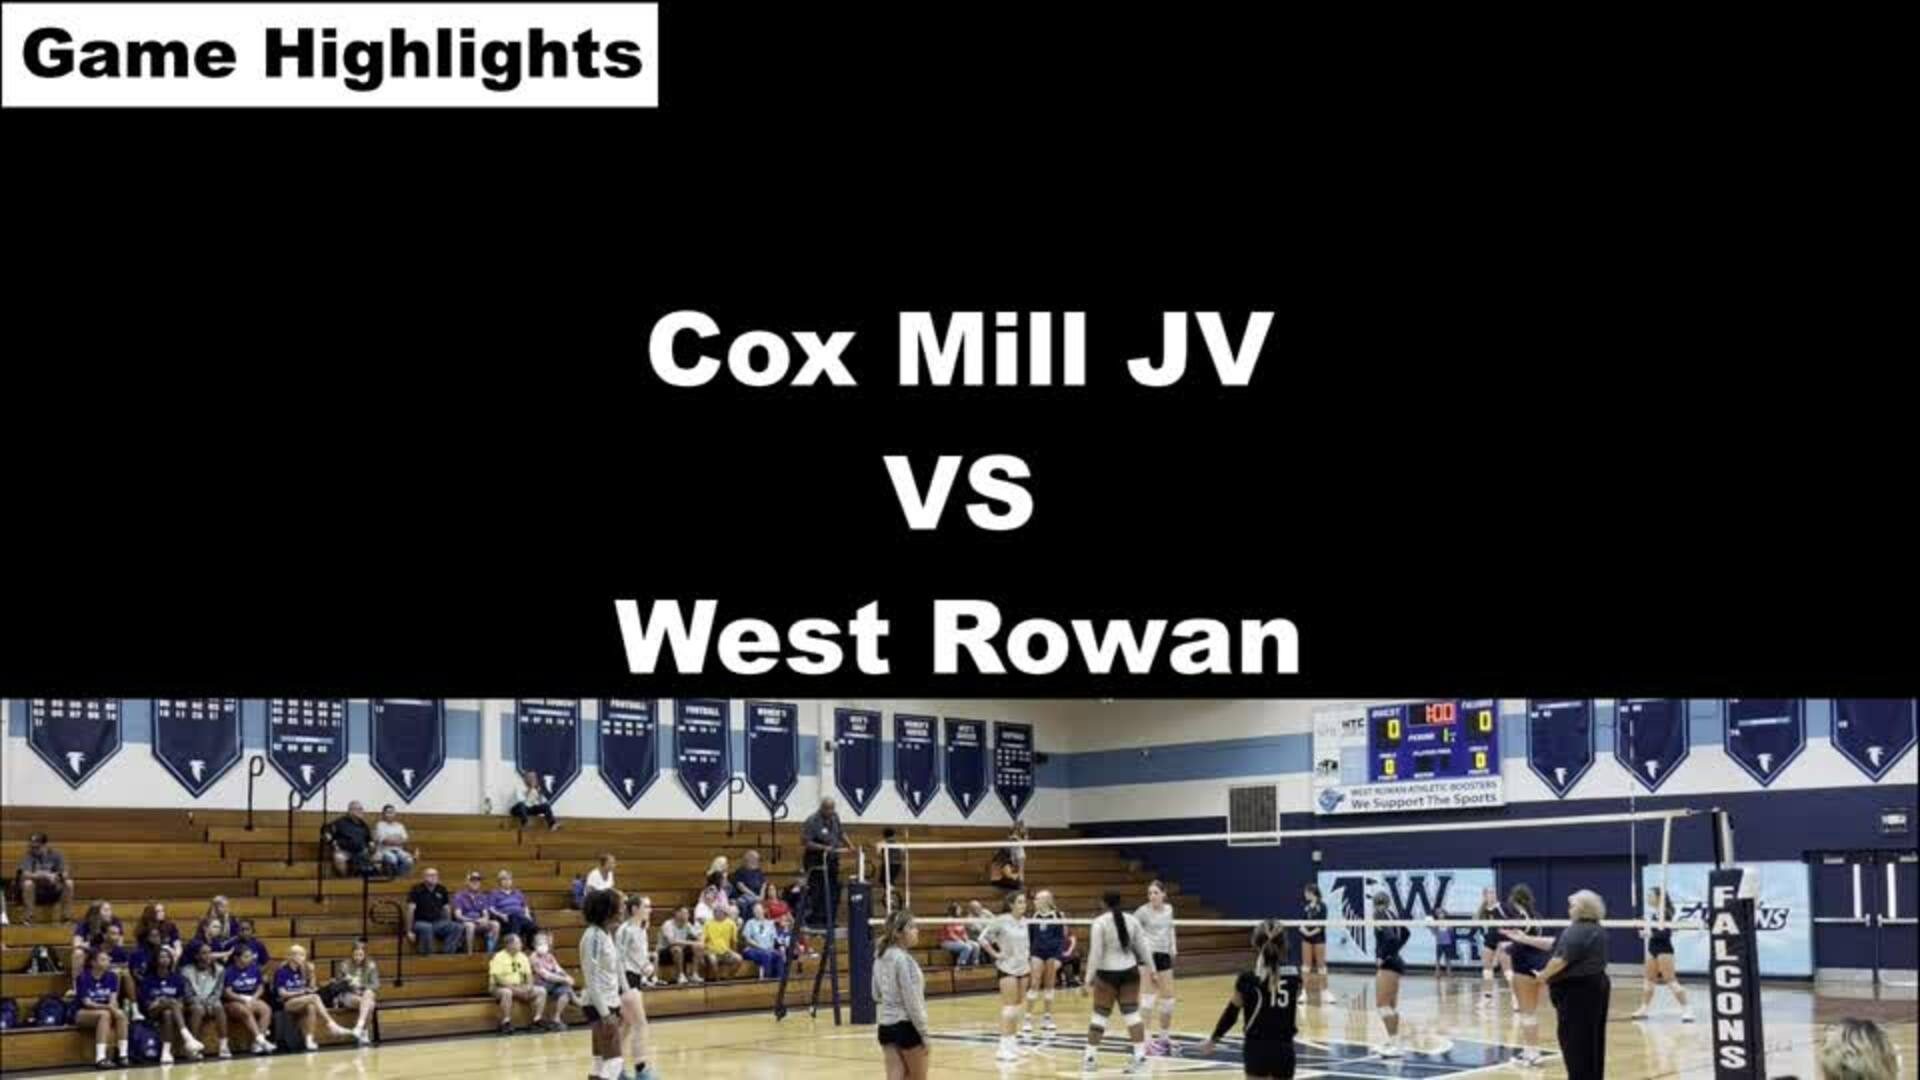 Cox Mill JV vs West Rowan